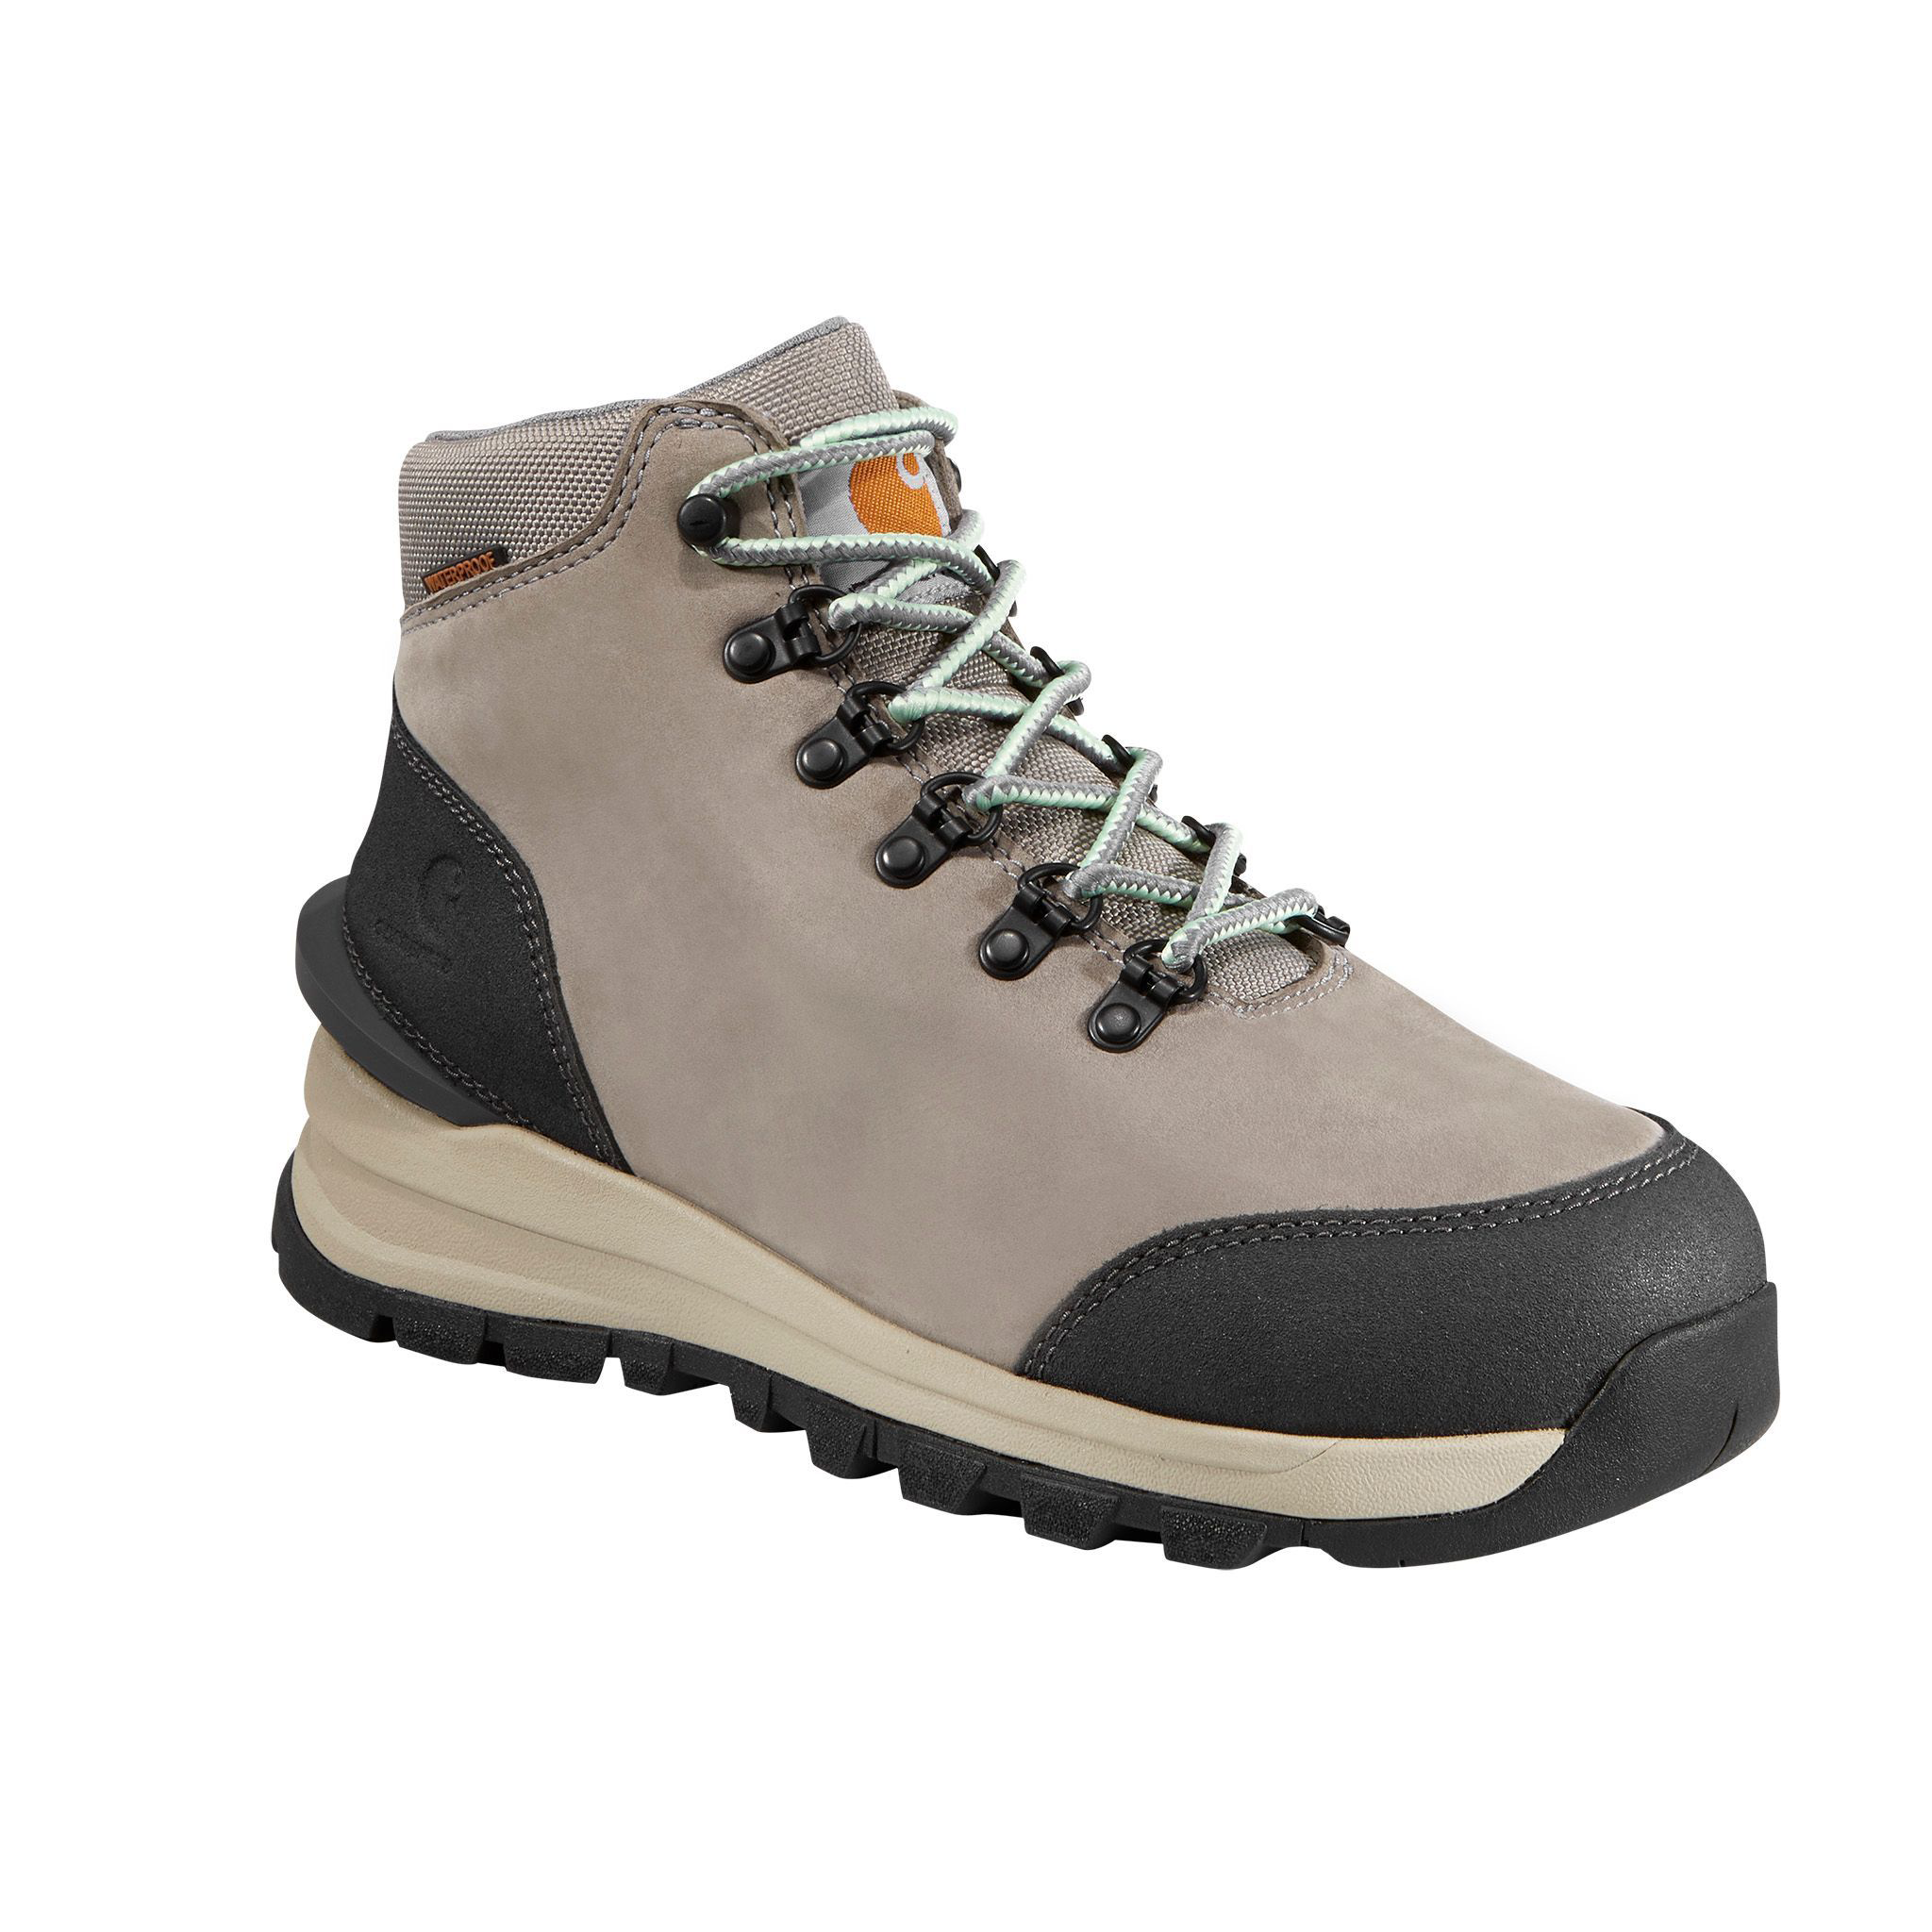 Carhartt Gilmore Waterproof Hiking Boots for Ladies - Grey Nubuck - 6.5M